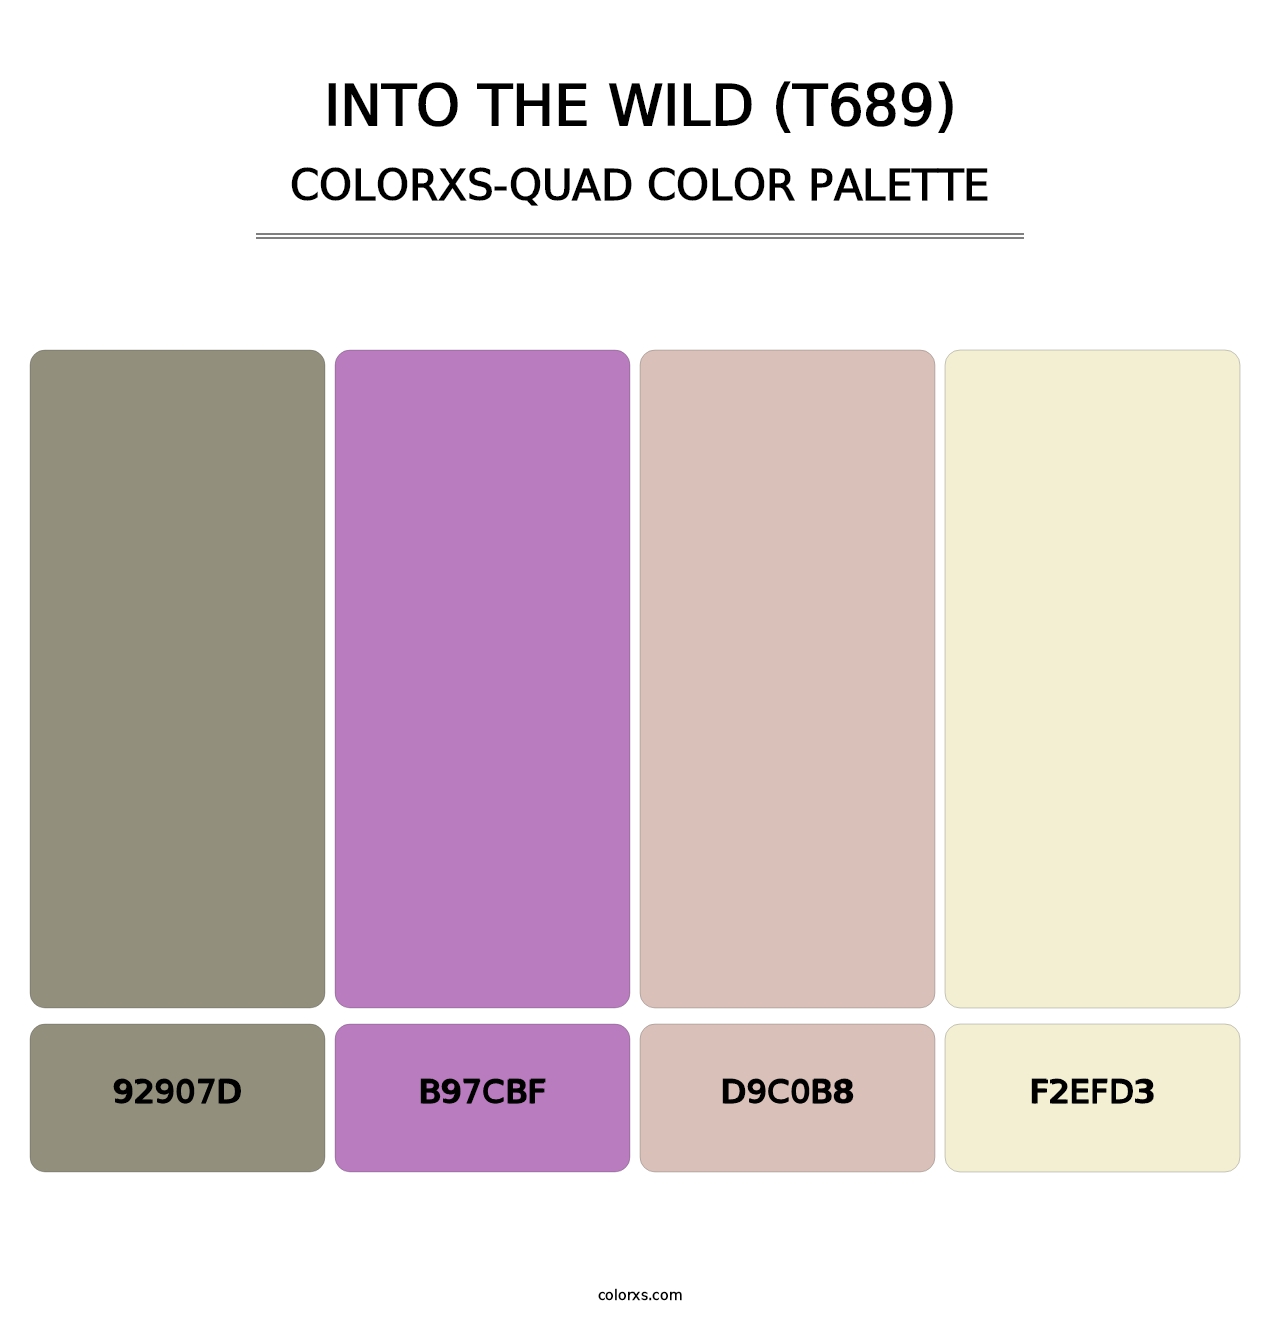 Into the Wild (T689) - Colorxs Quad Palette